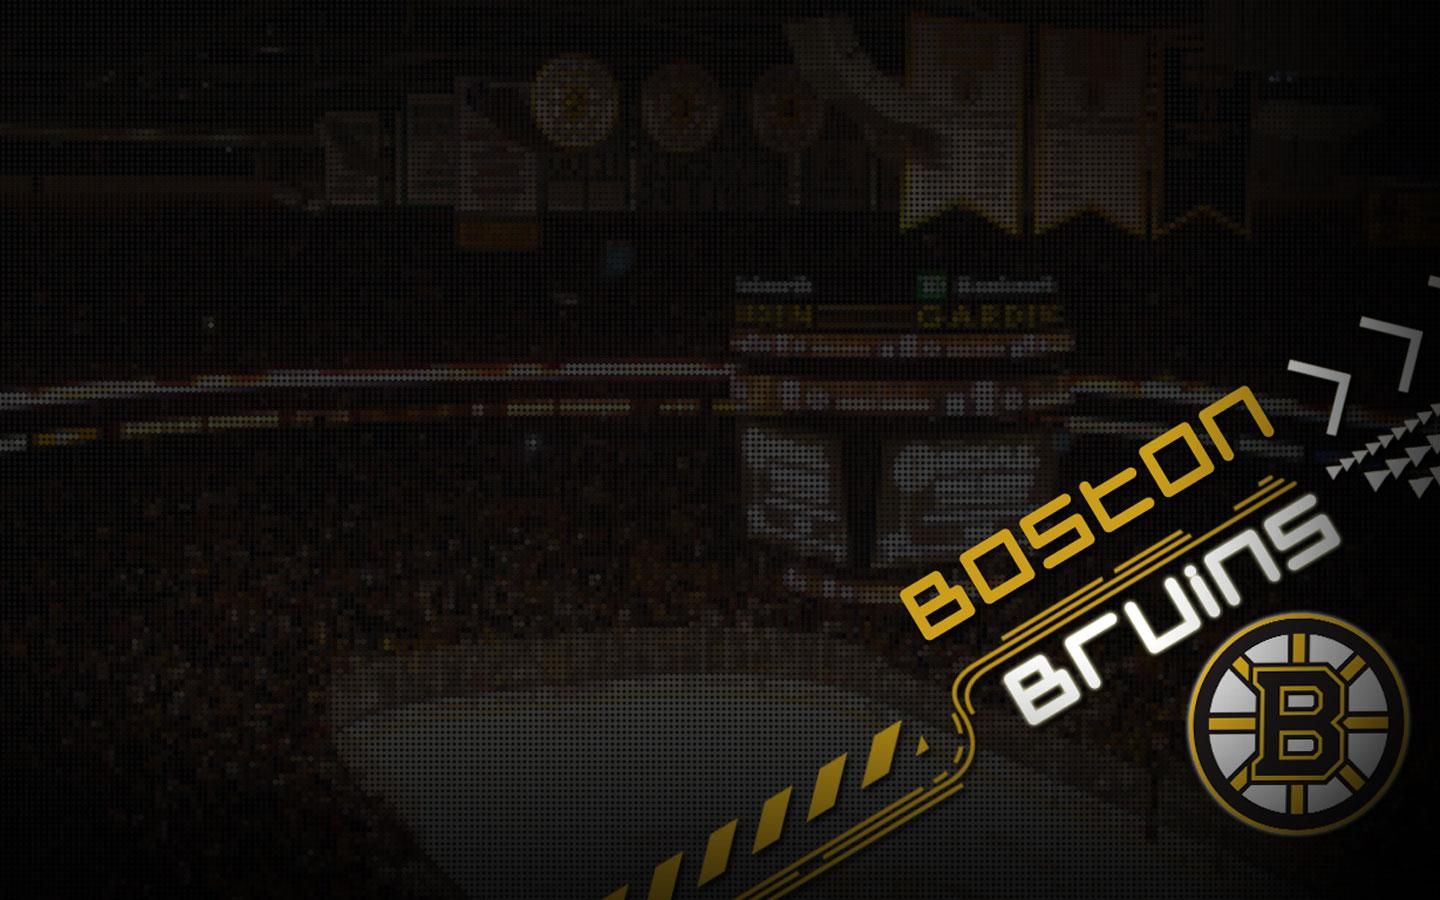 Download Boston Bruins Wallpapers | HD Wallpapers Range